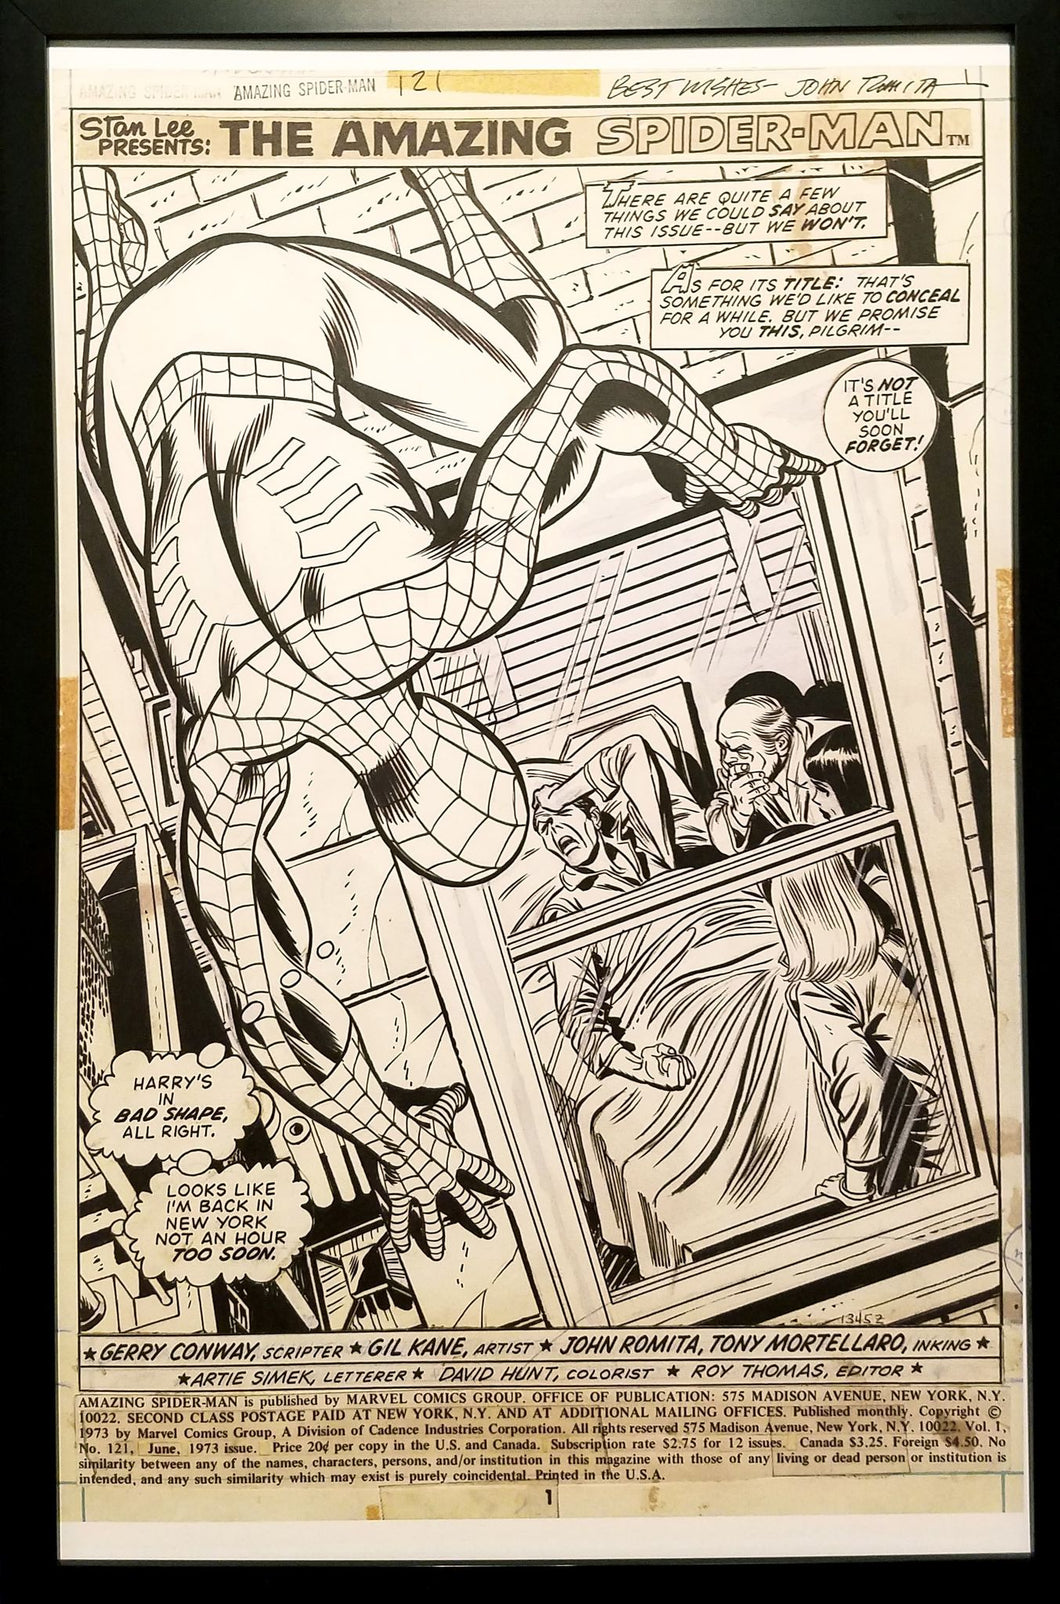 Amazing Spider-Man #121 pg. 1 Gil Kane 11x17 FRAMED Original Art Poster Marvel Comics